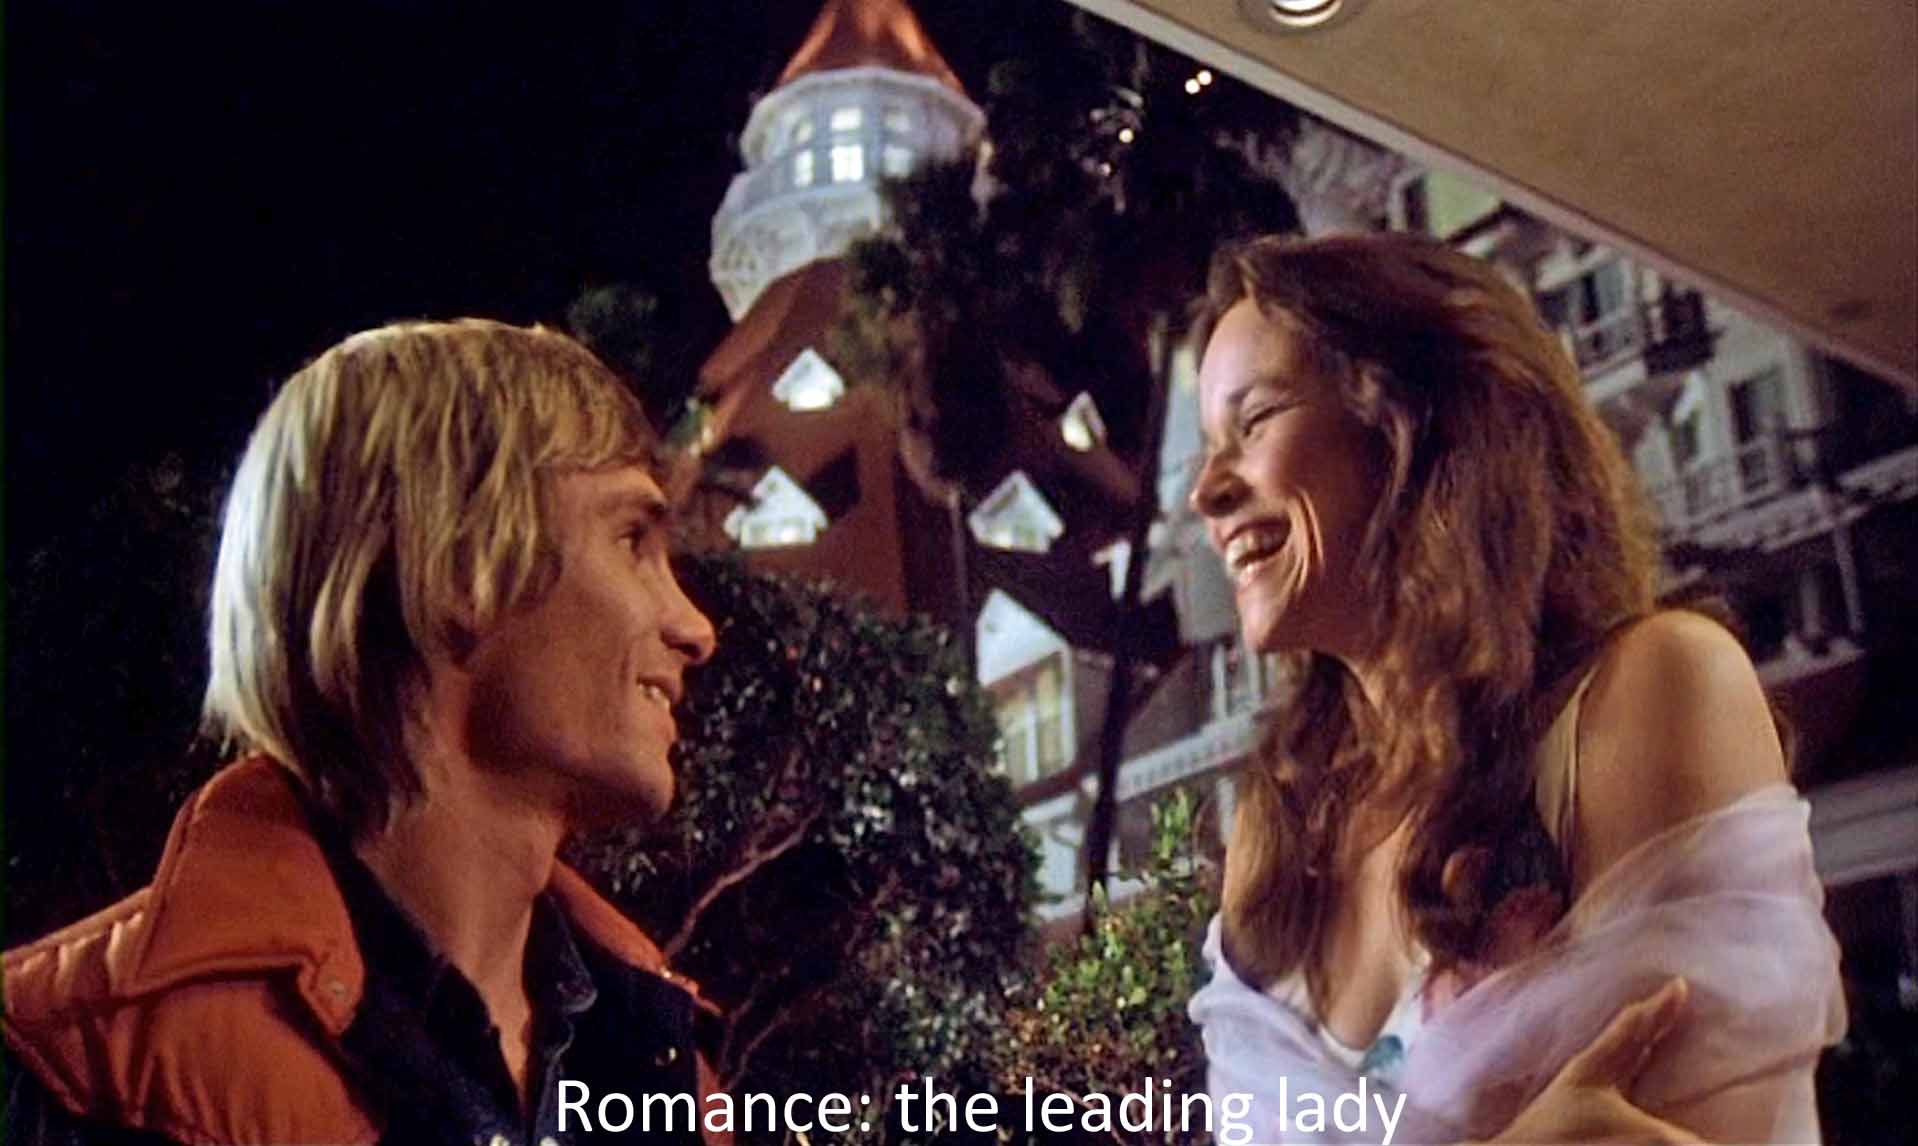 Romance: the leading lady